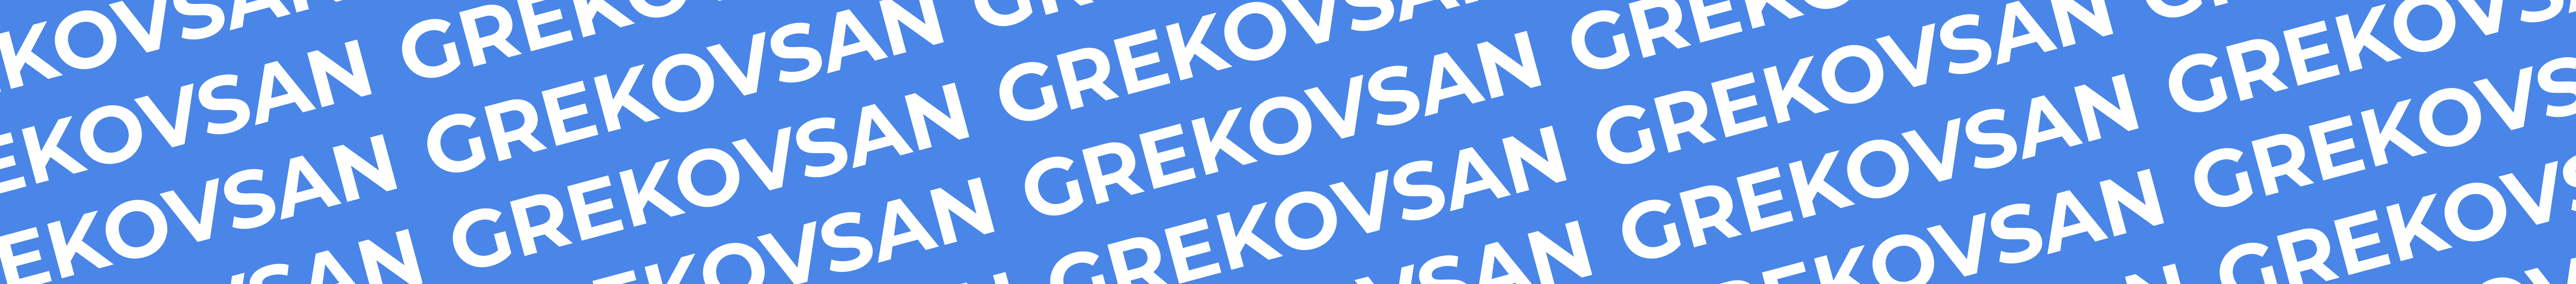 Aleksandr Grekov's profile banner